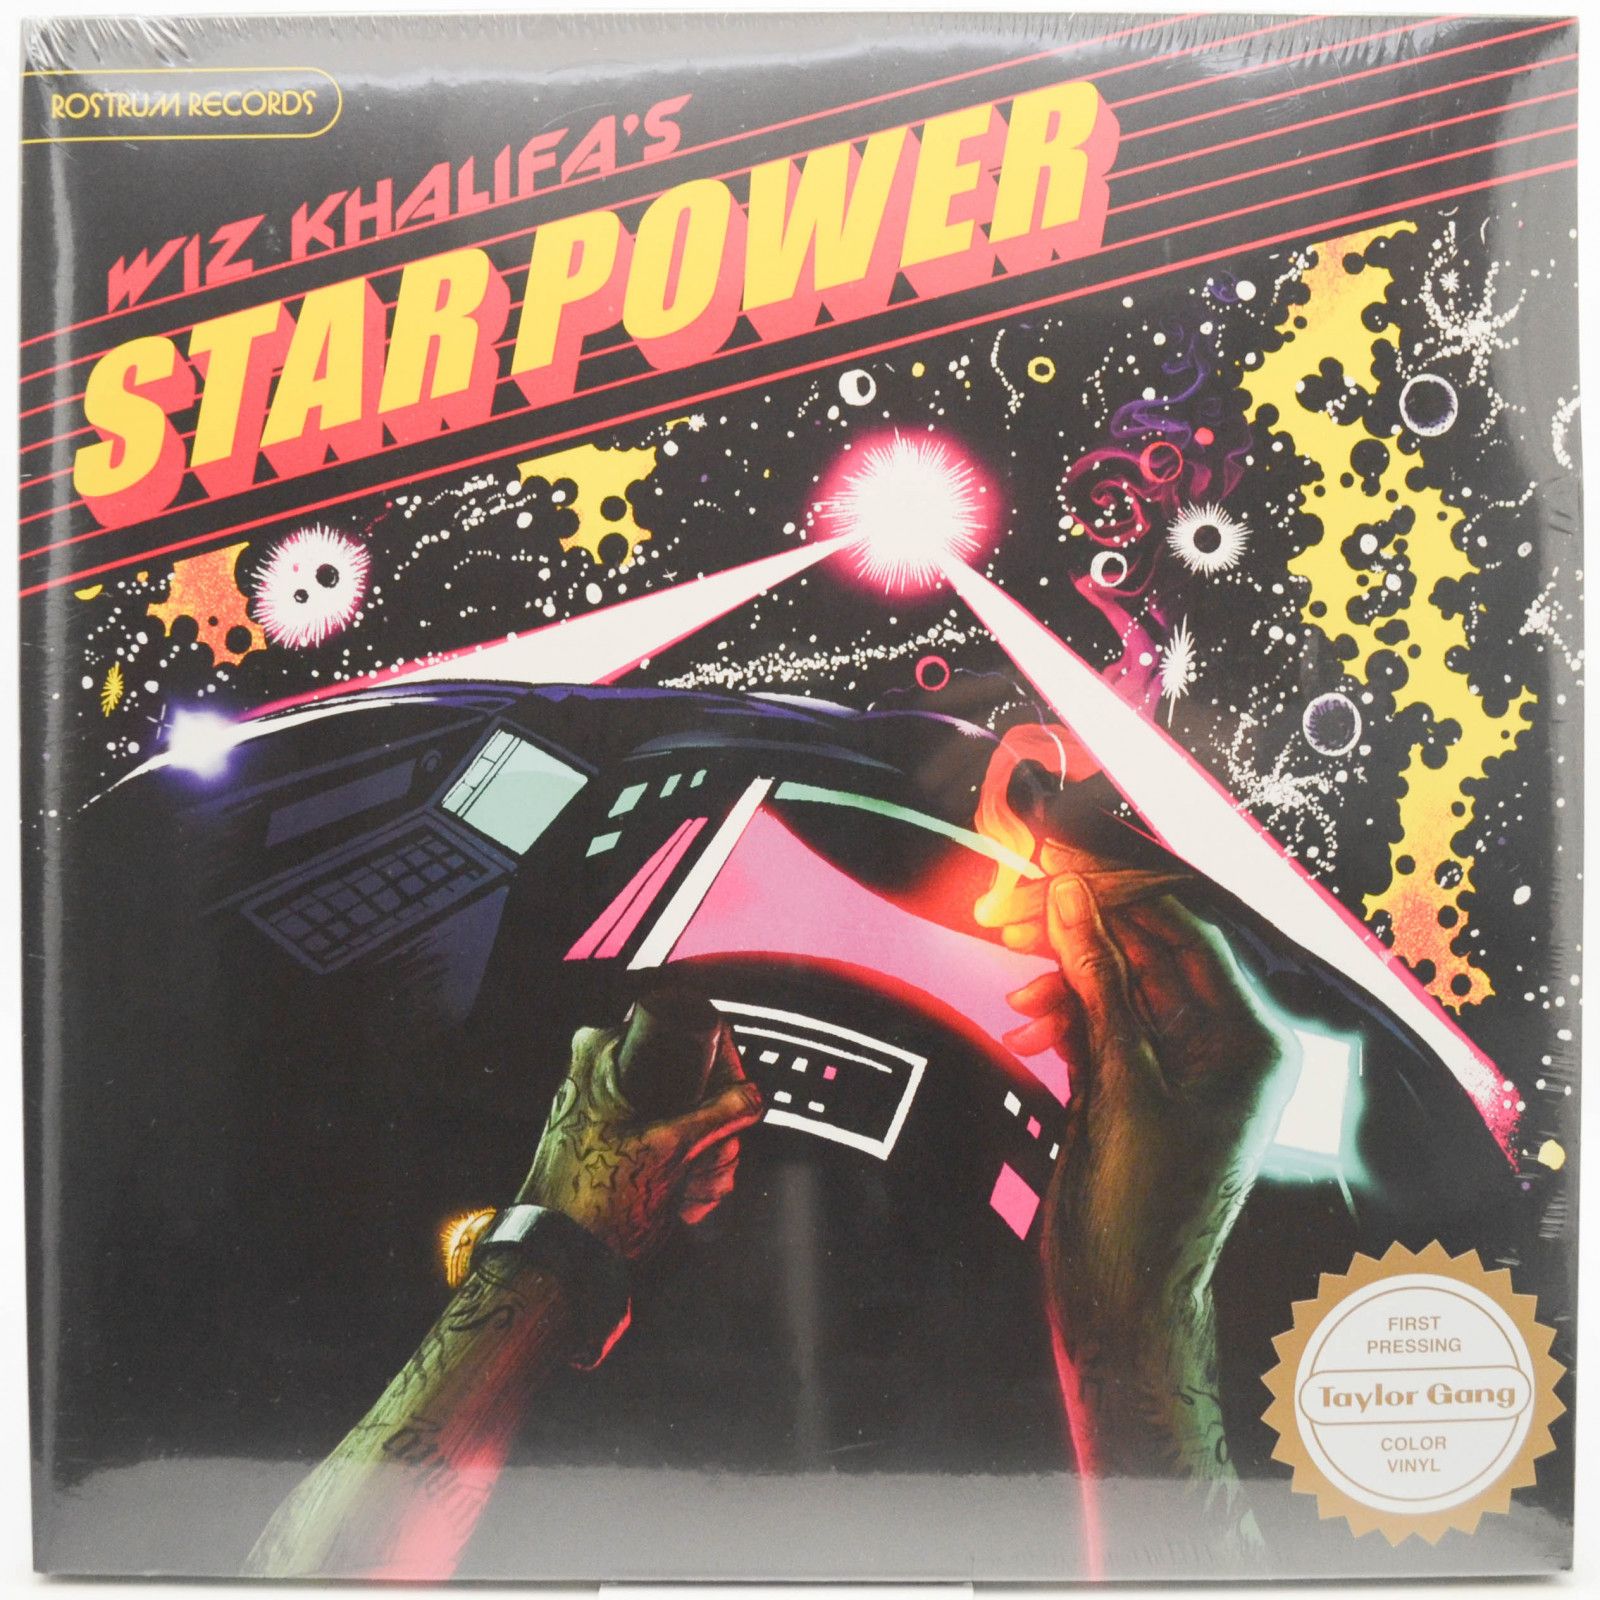 Wiz Khalifa — Star Power (2LP, USA), 2008